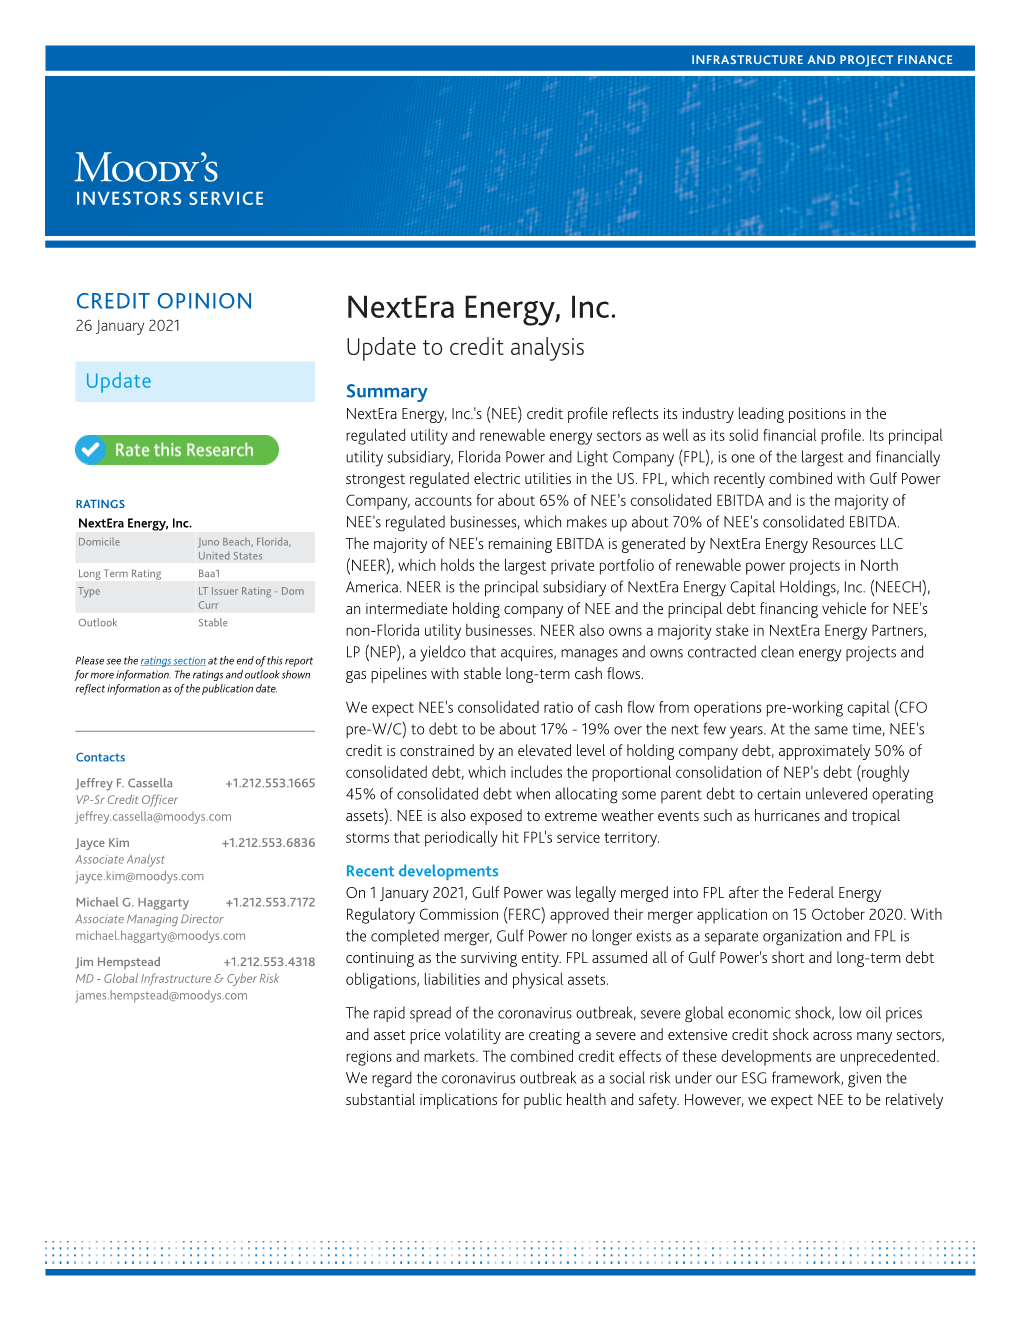 Nextera Energy, Inc. 26 January 2021 Update to Credit Analysis